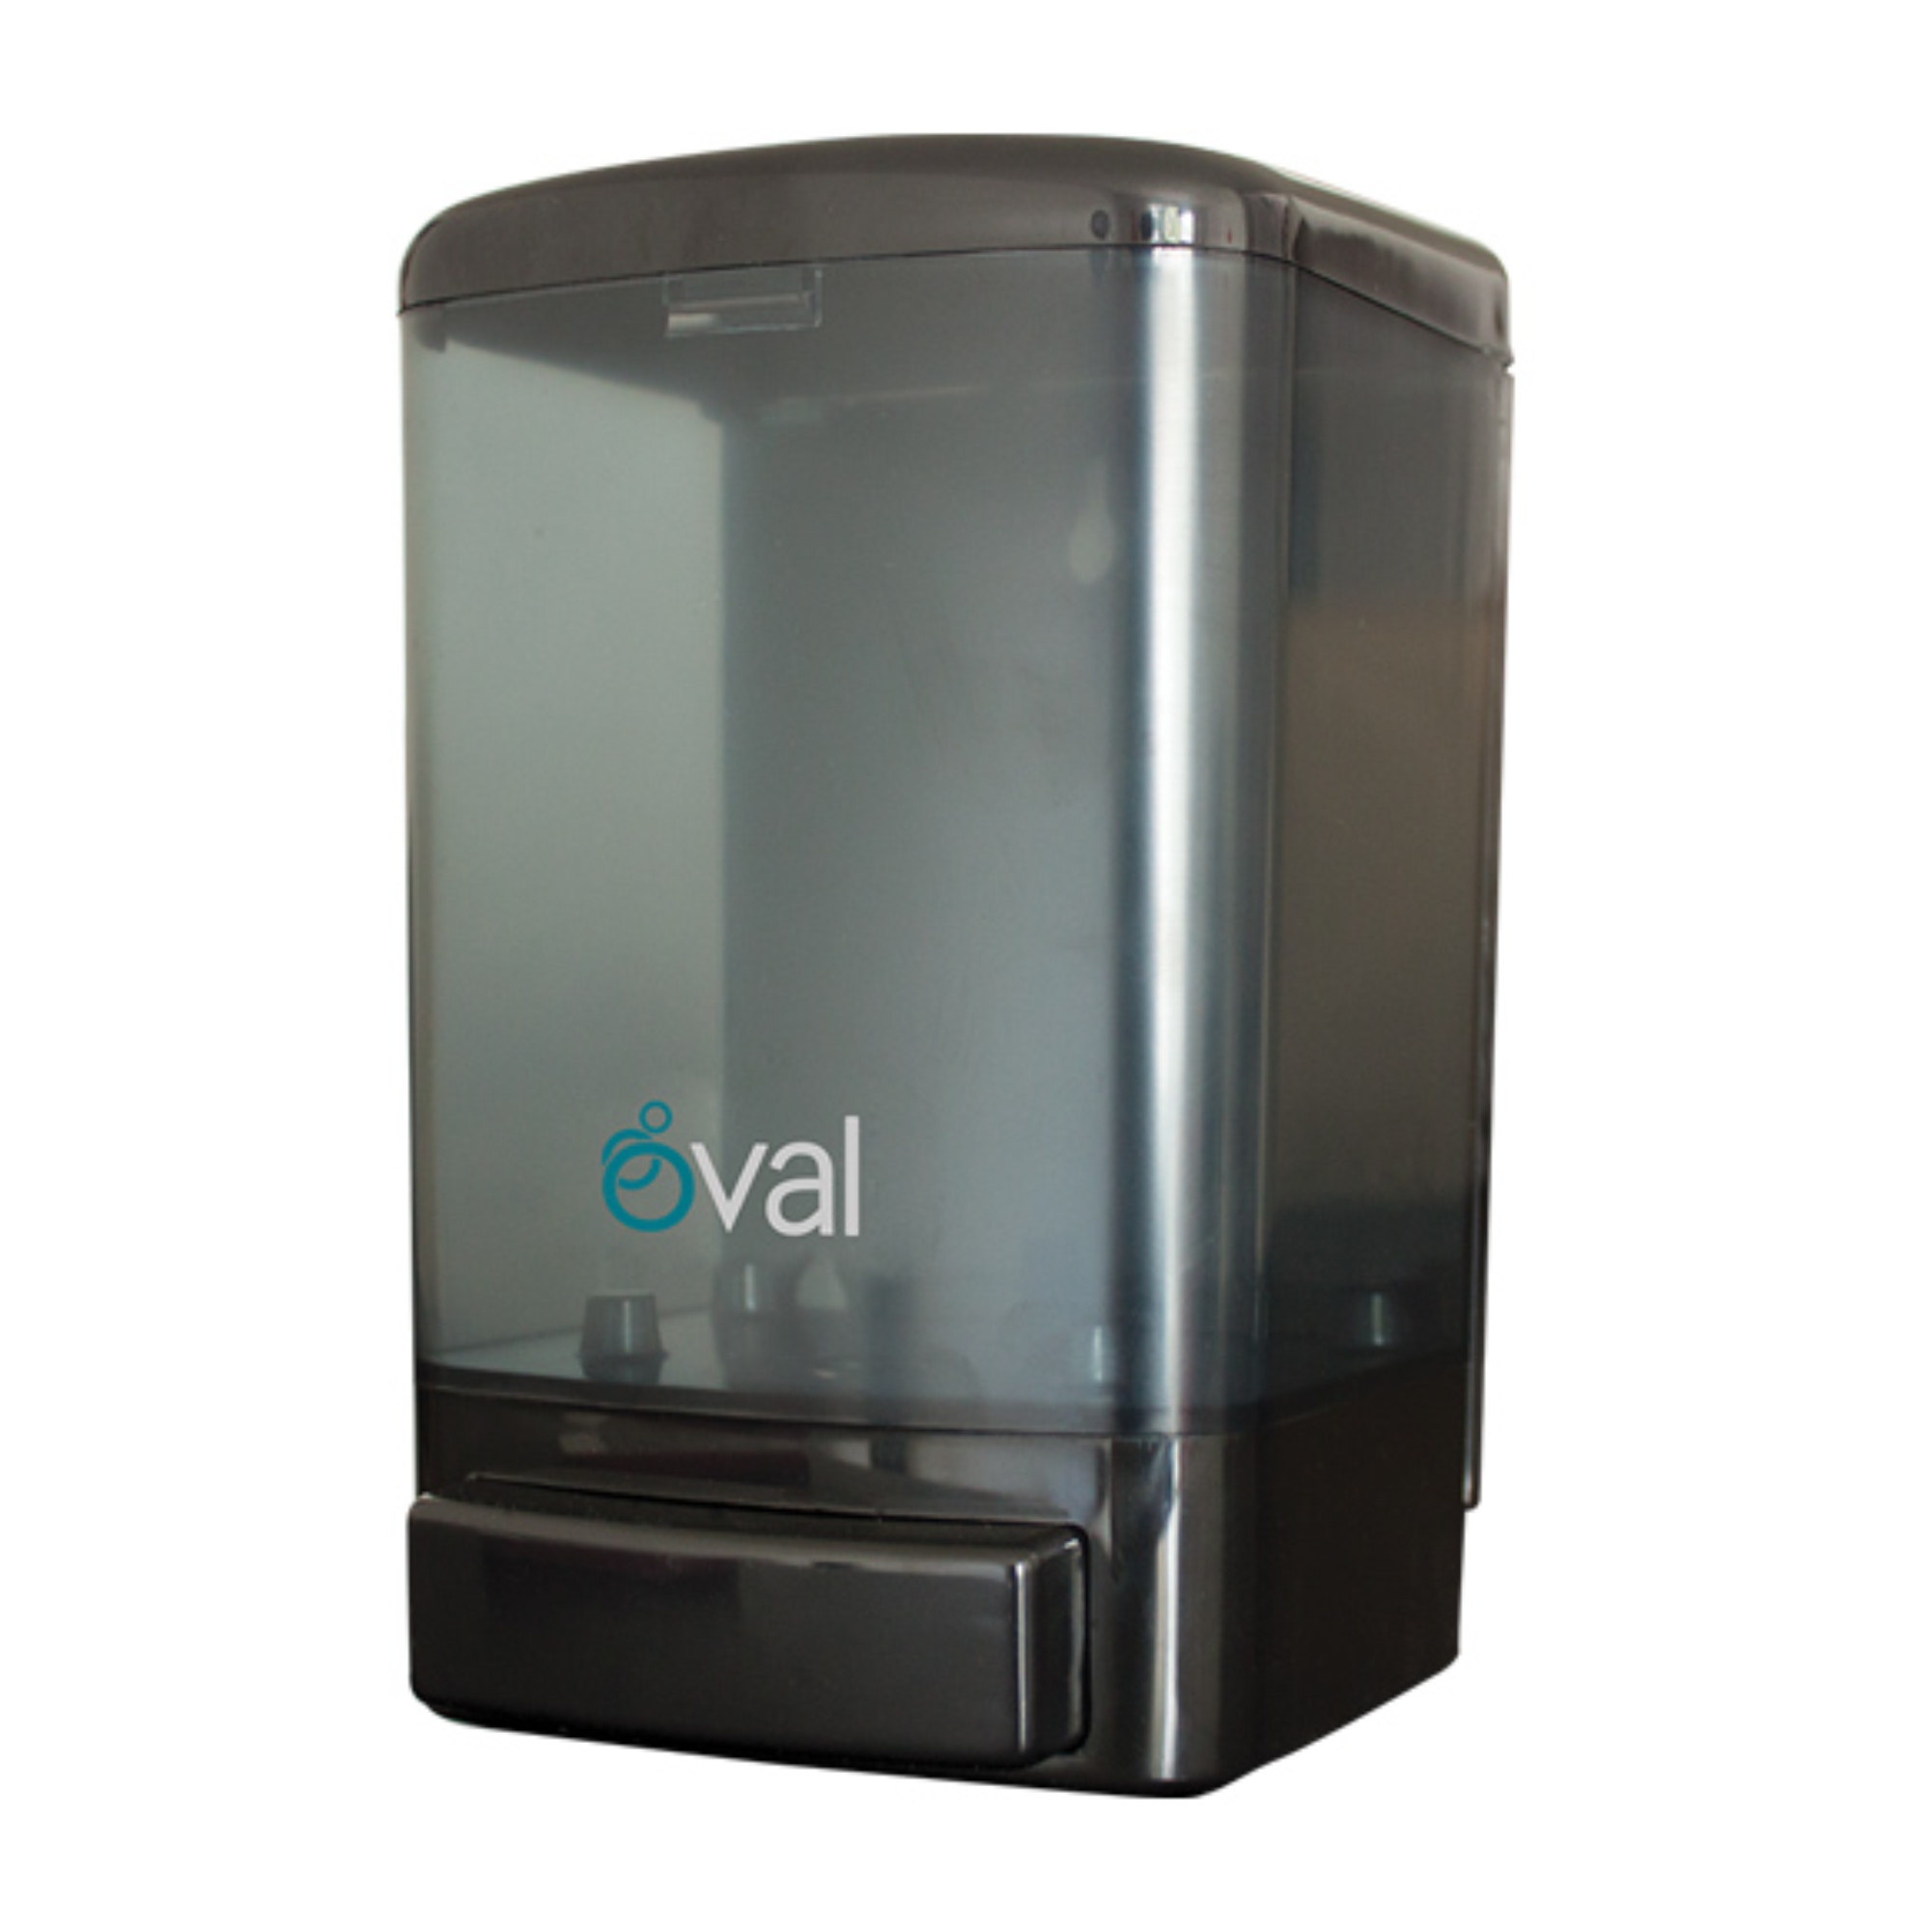 Oval DV018 Jabonera manual dispensadora de jabón líquido, color negra